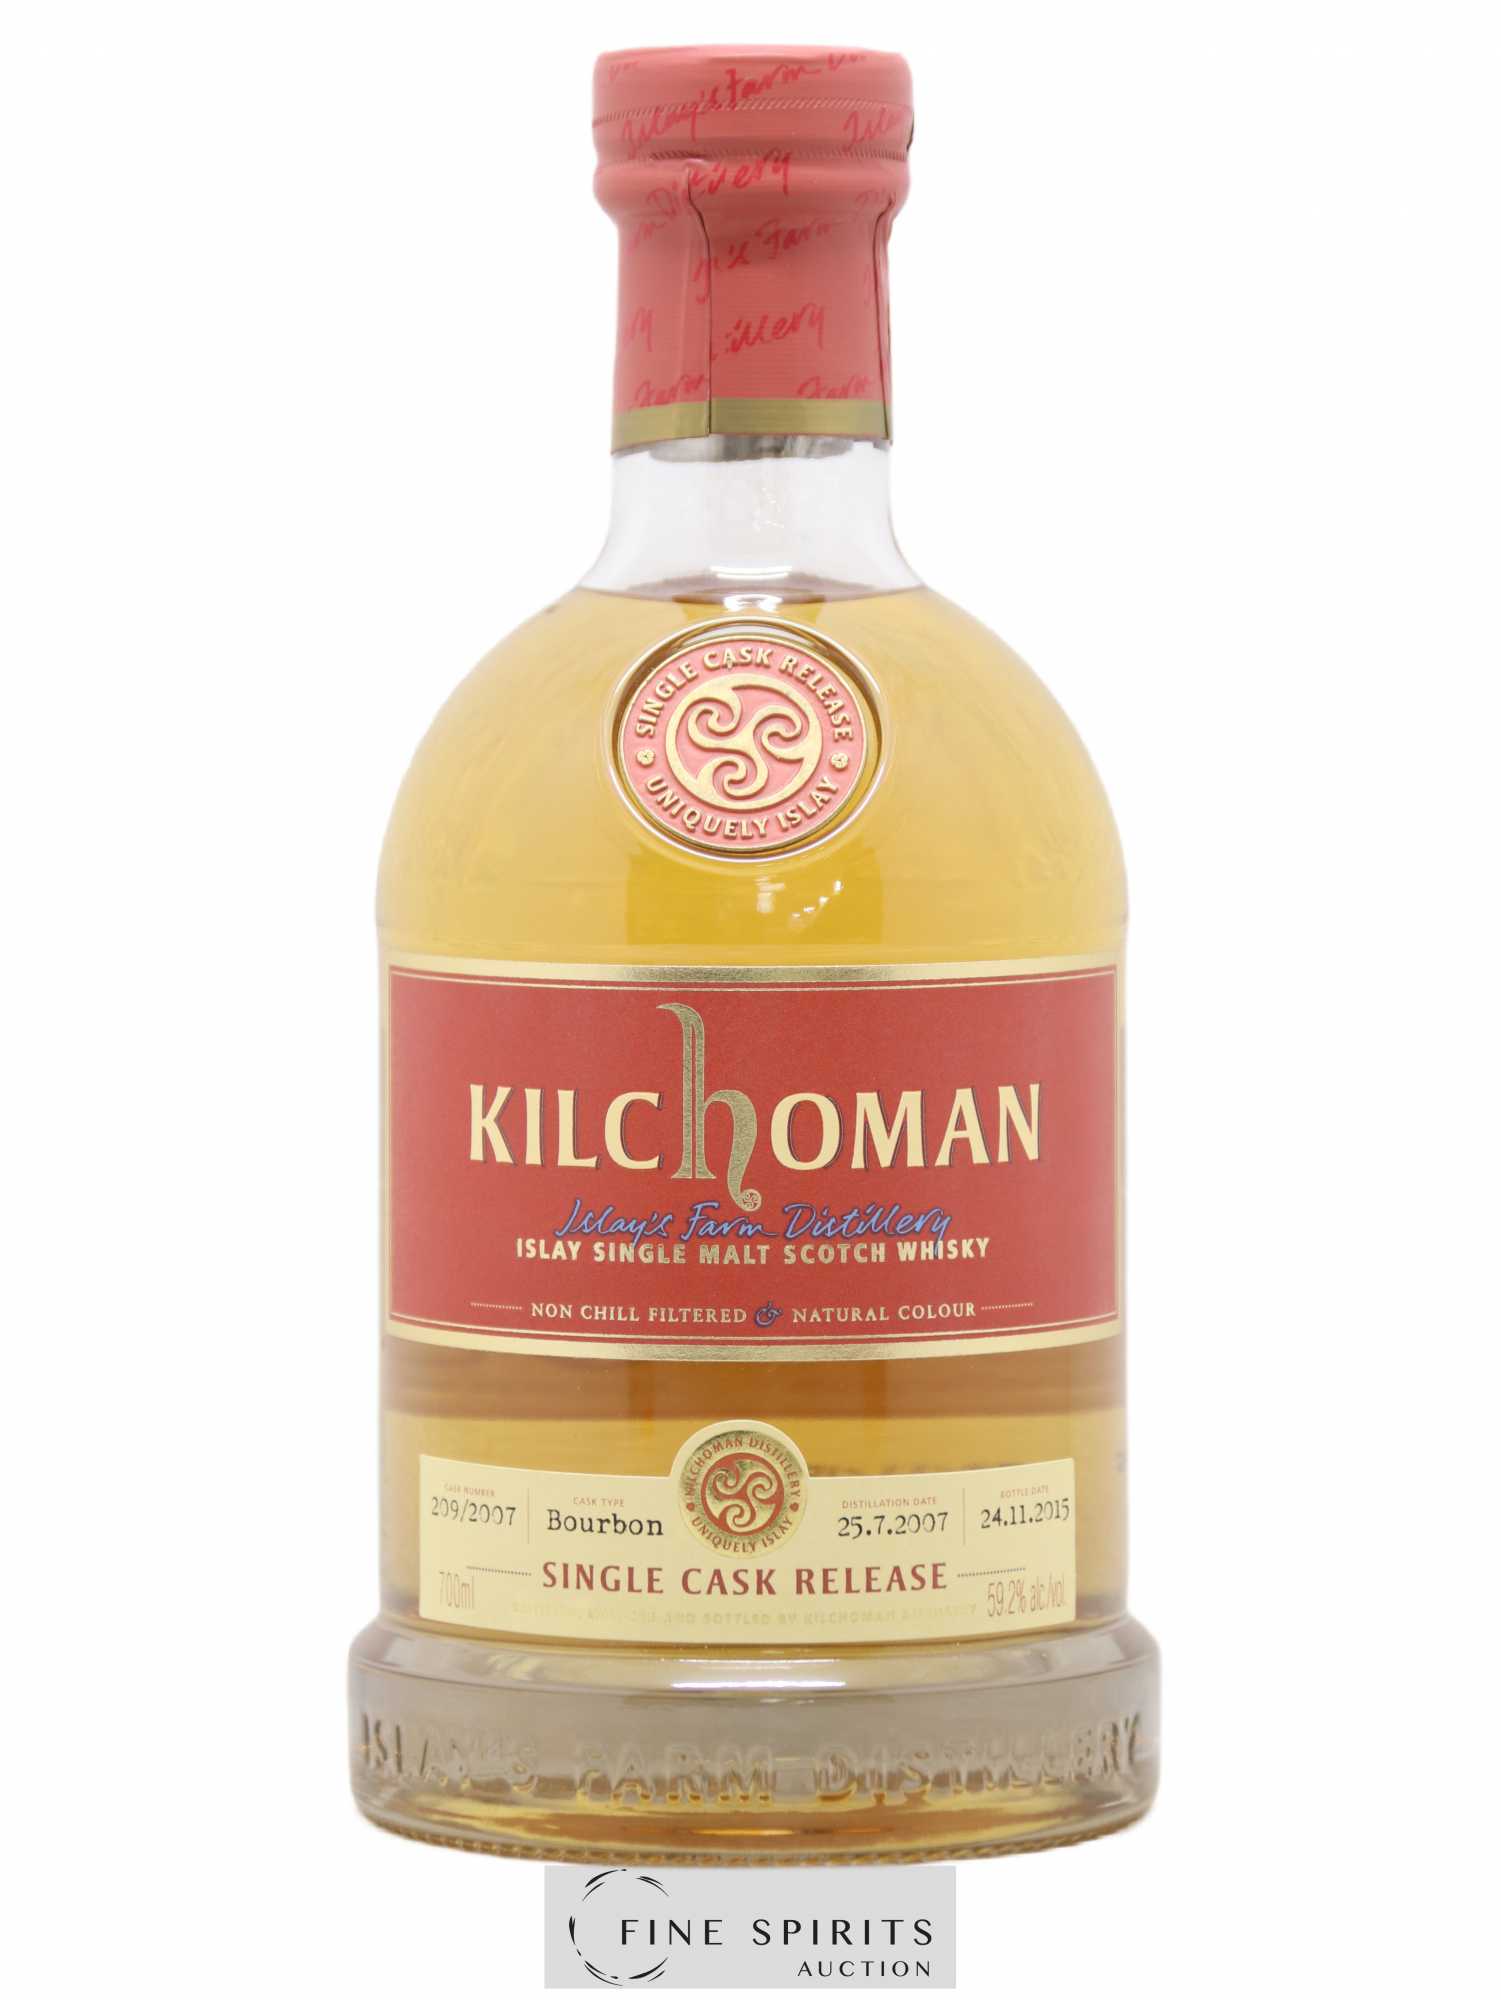 Kilchoman 2007 Of. Bourbon Cask n°209-2007 - One of 241 - bottled 2015 